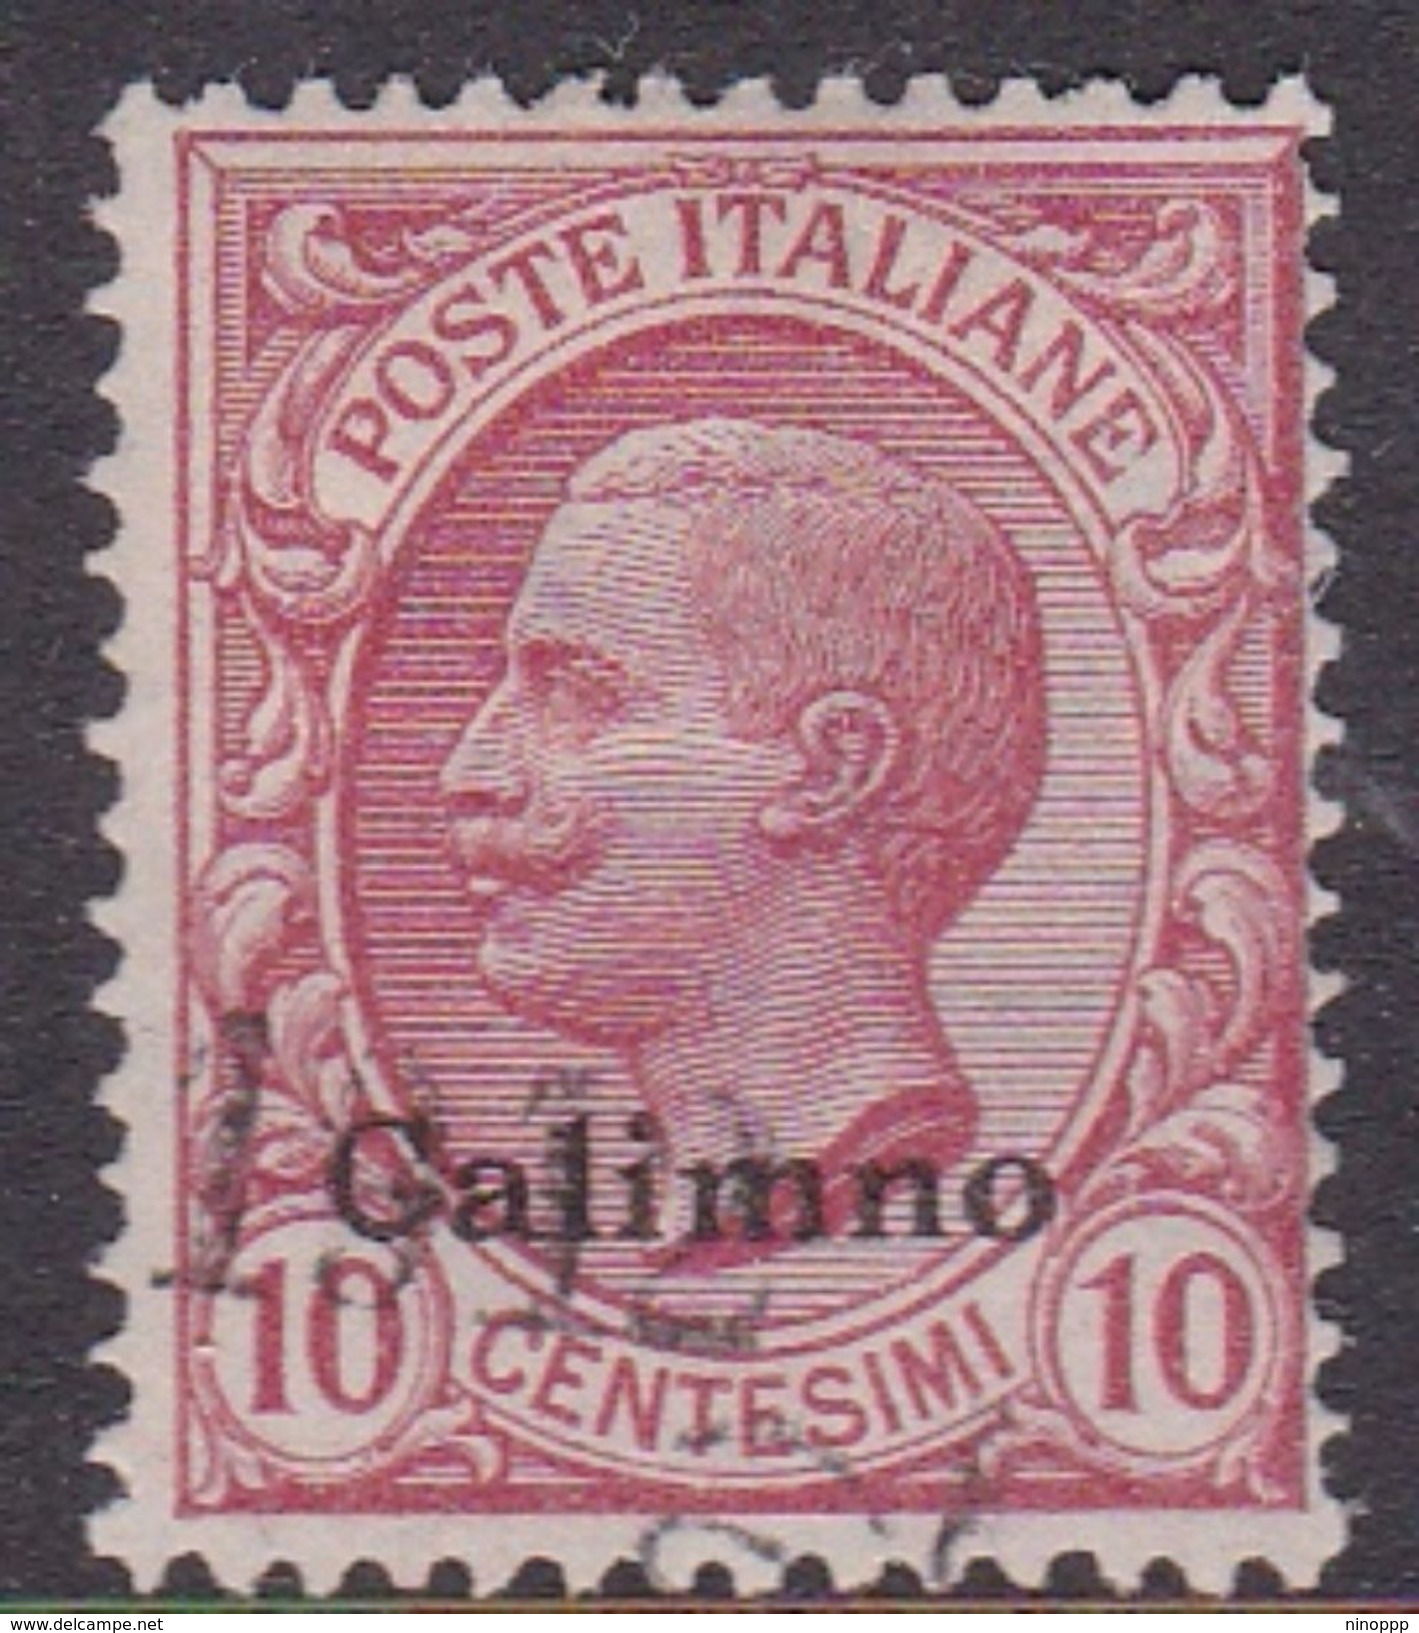 Italy-Colonies And Territories-Aegean-Calino S3  1912 10c Rose Used - Egée (Calino)